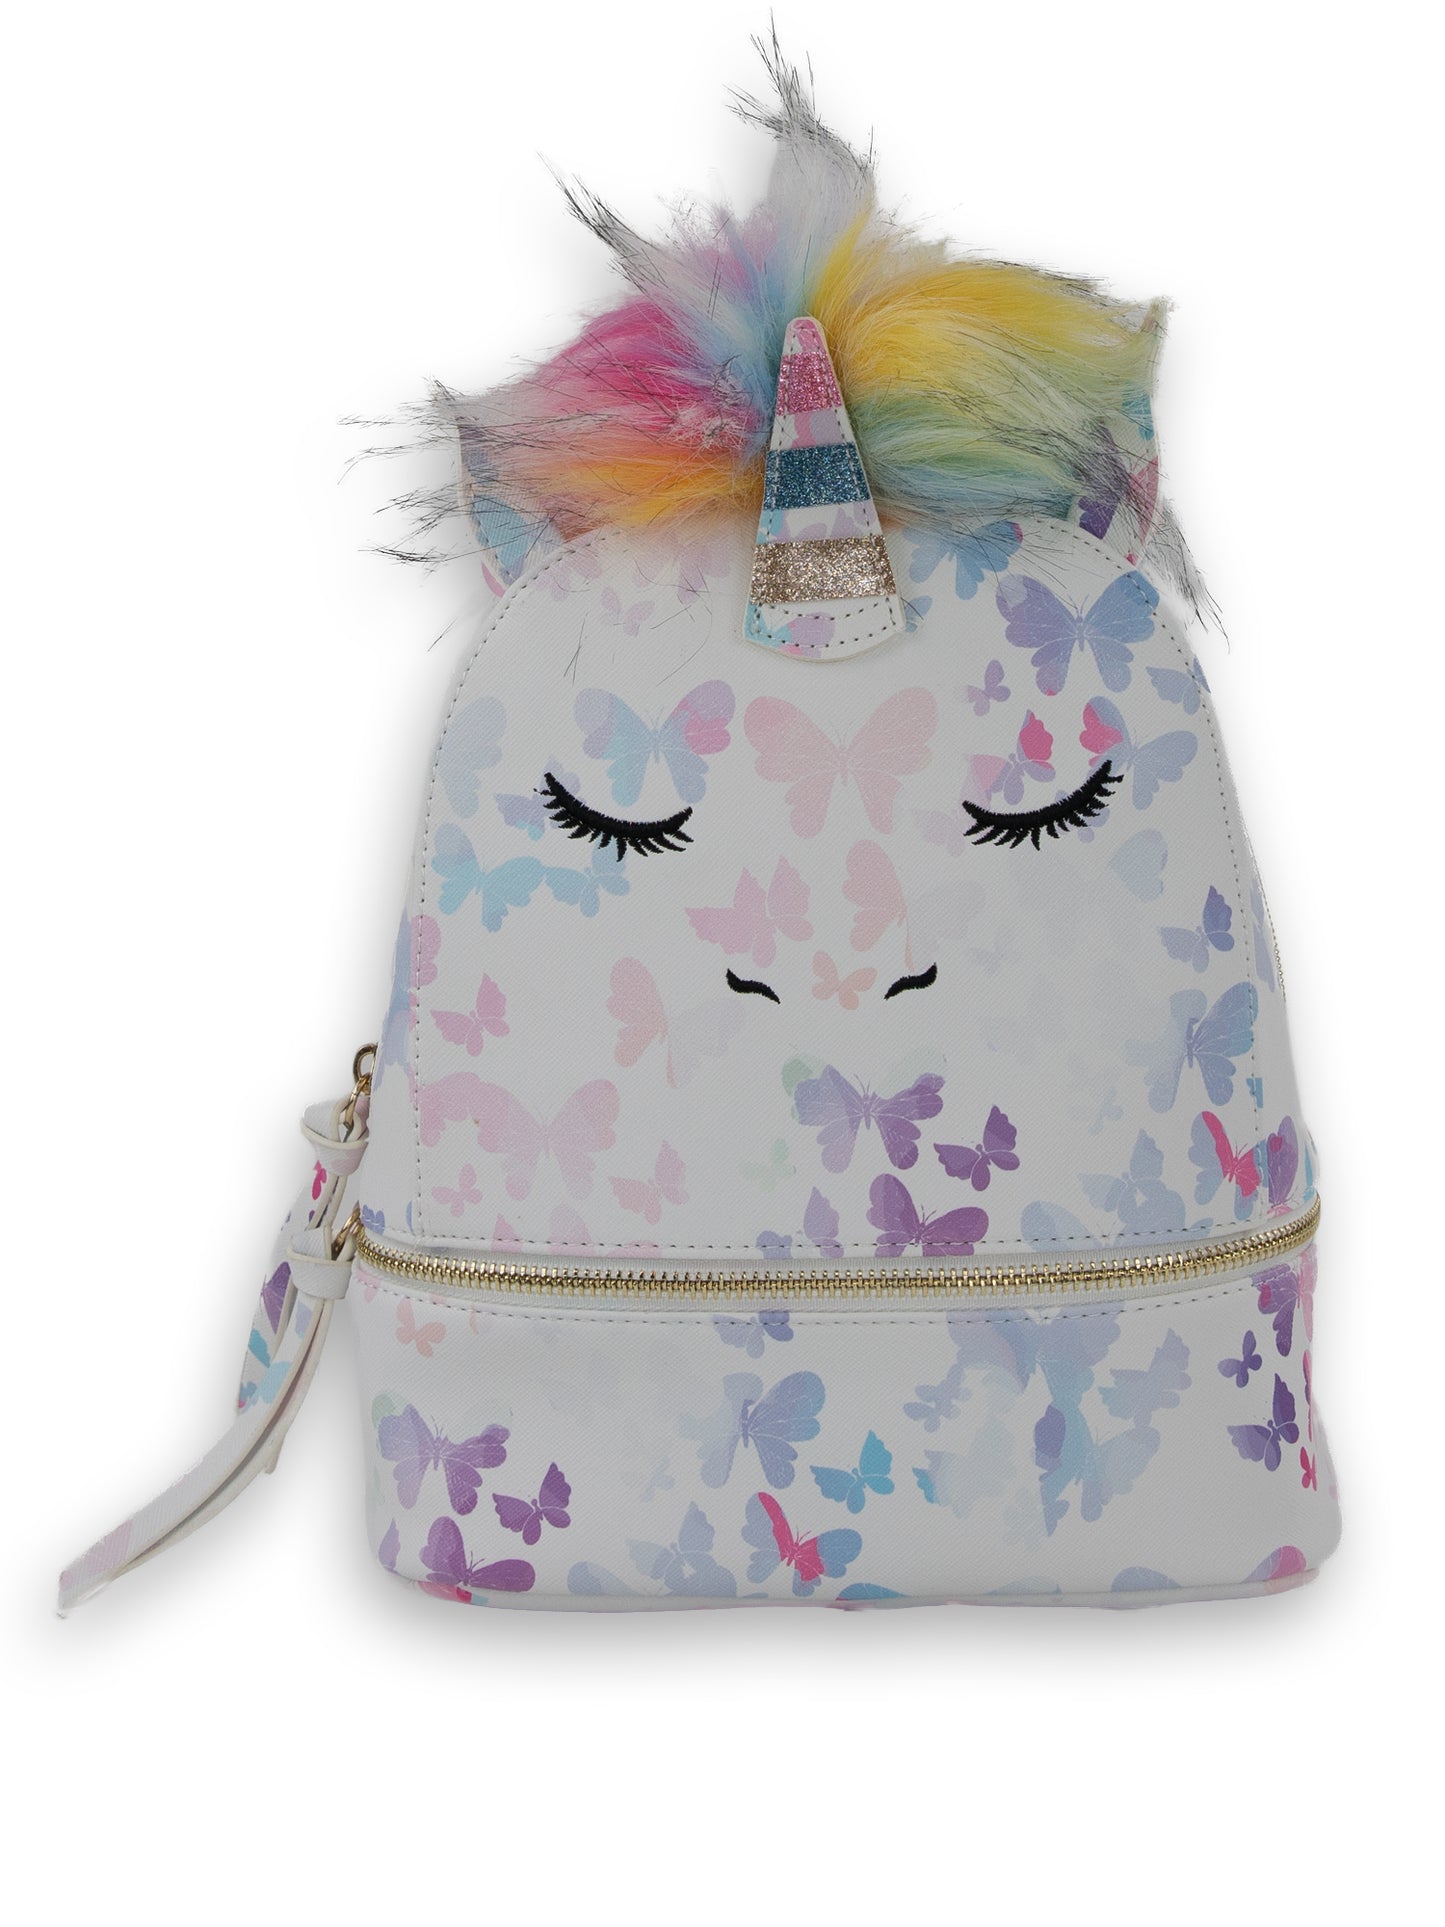 New 💕 Under One Sky Rainbow Koala backpack 🌈